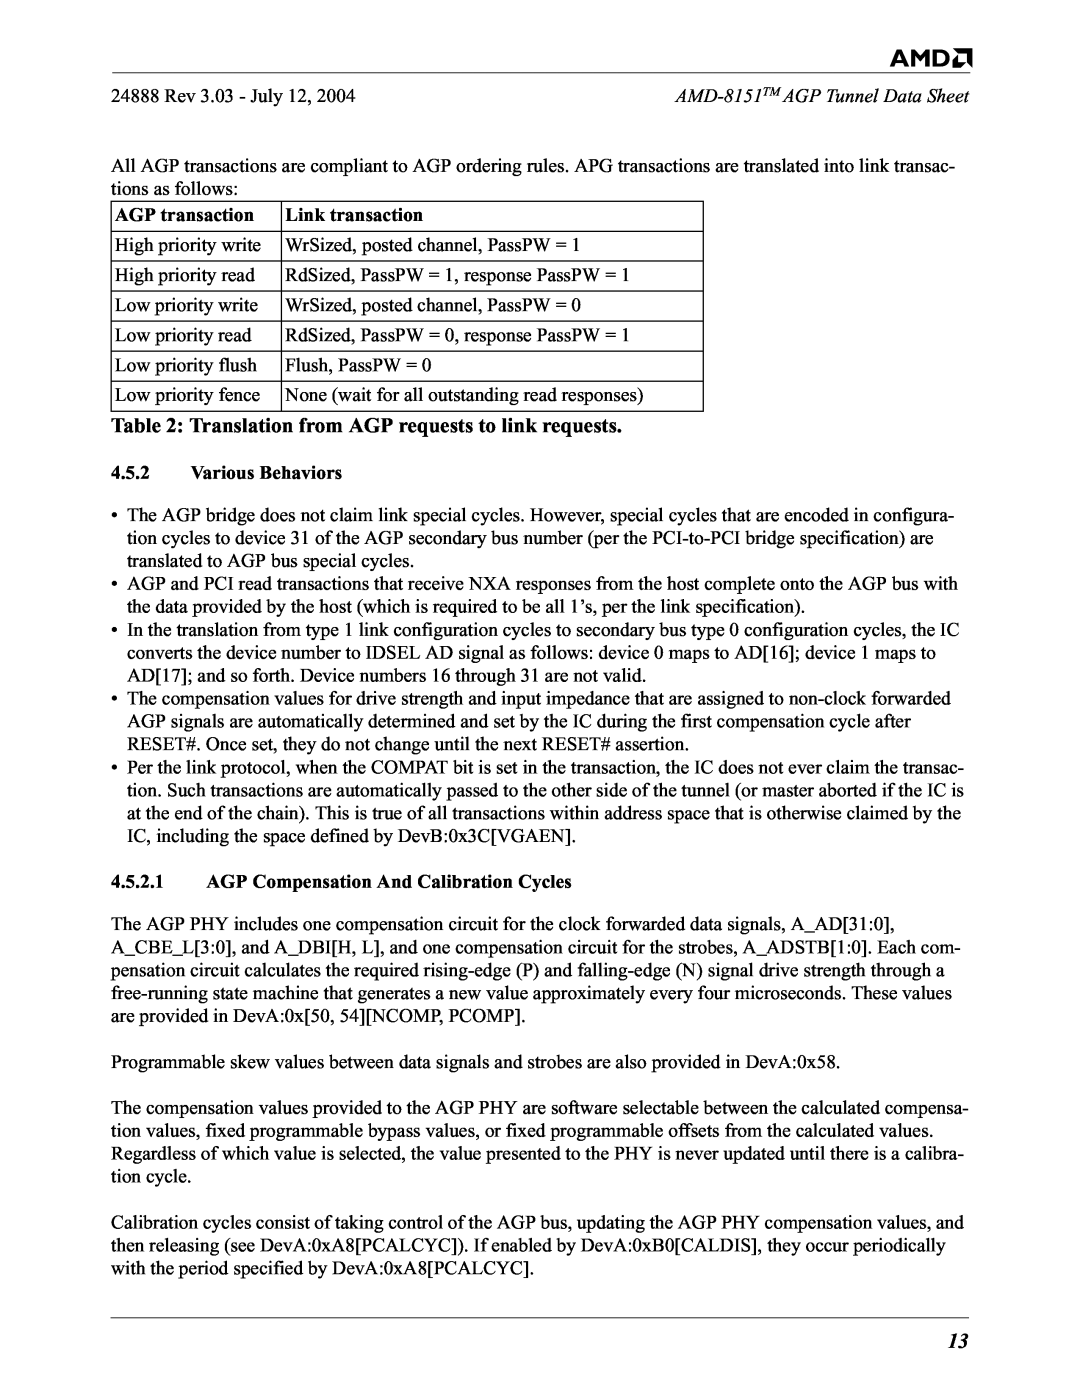 AMD 8151 specifications Rev 3.03 - July, AGP transaction, Link transaction, 4.5.2Various Behaviors 